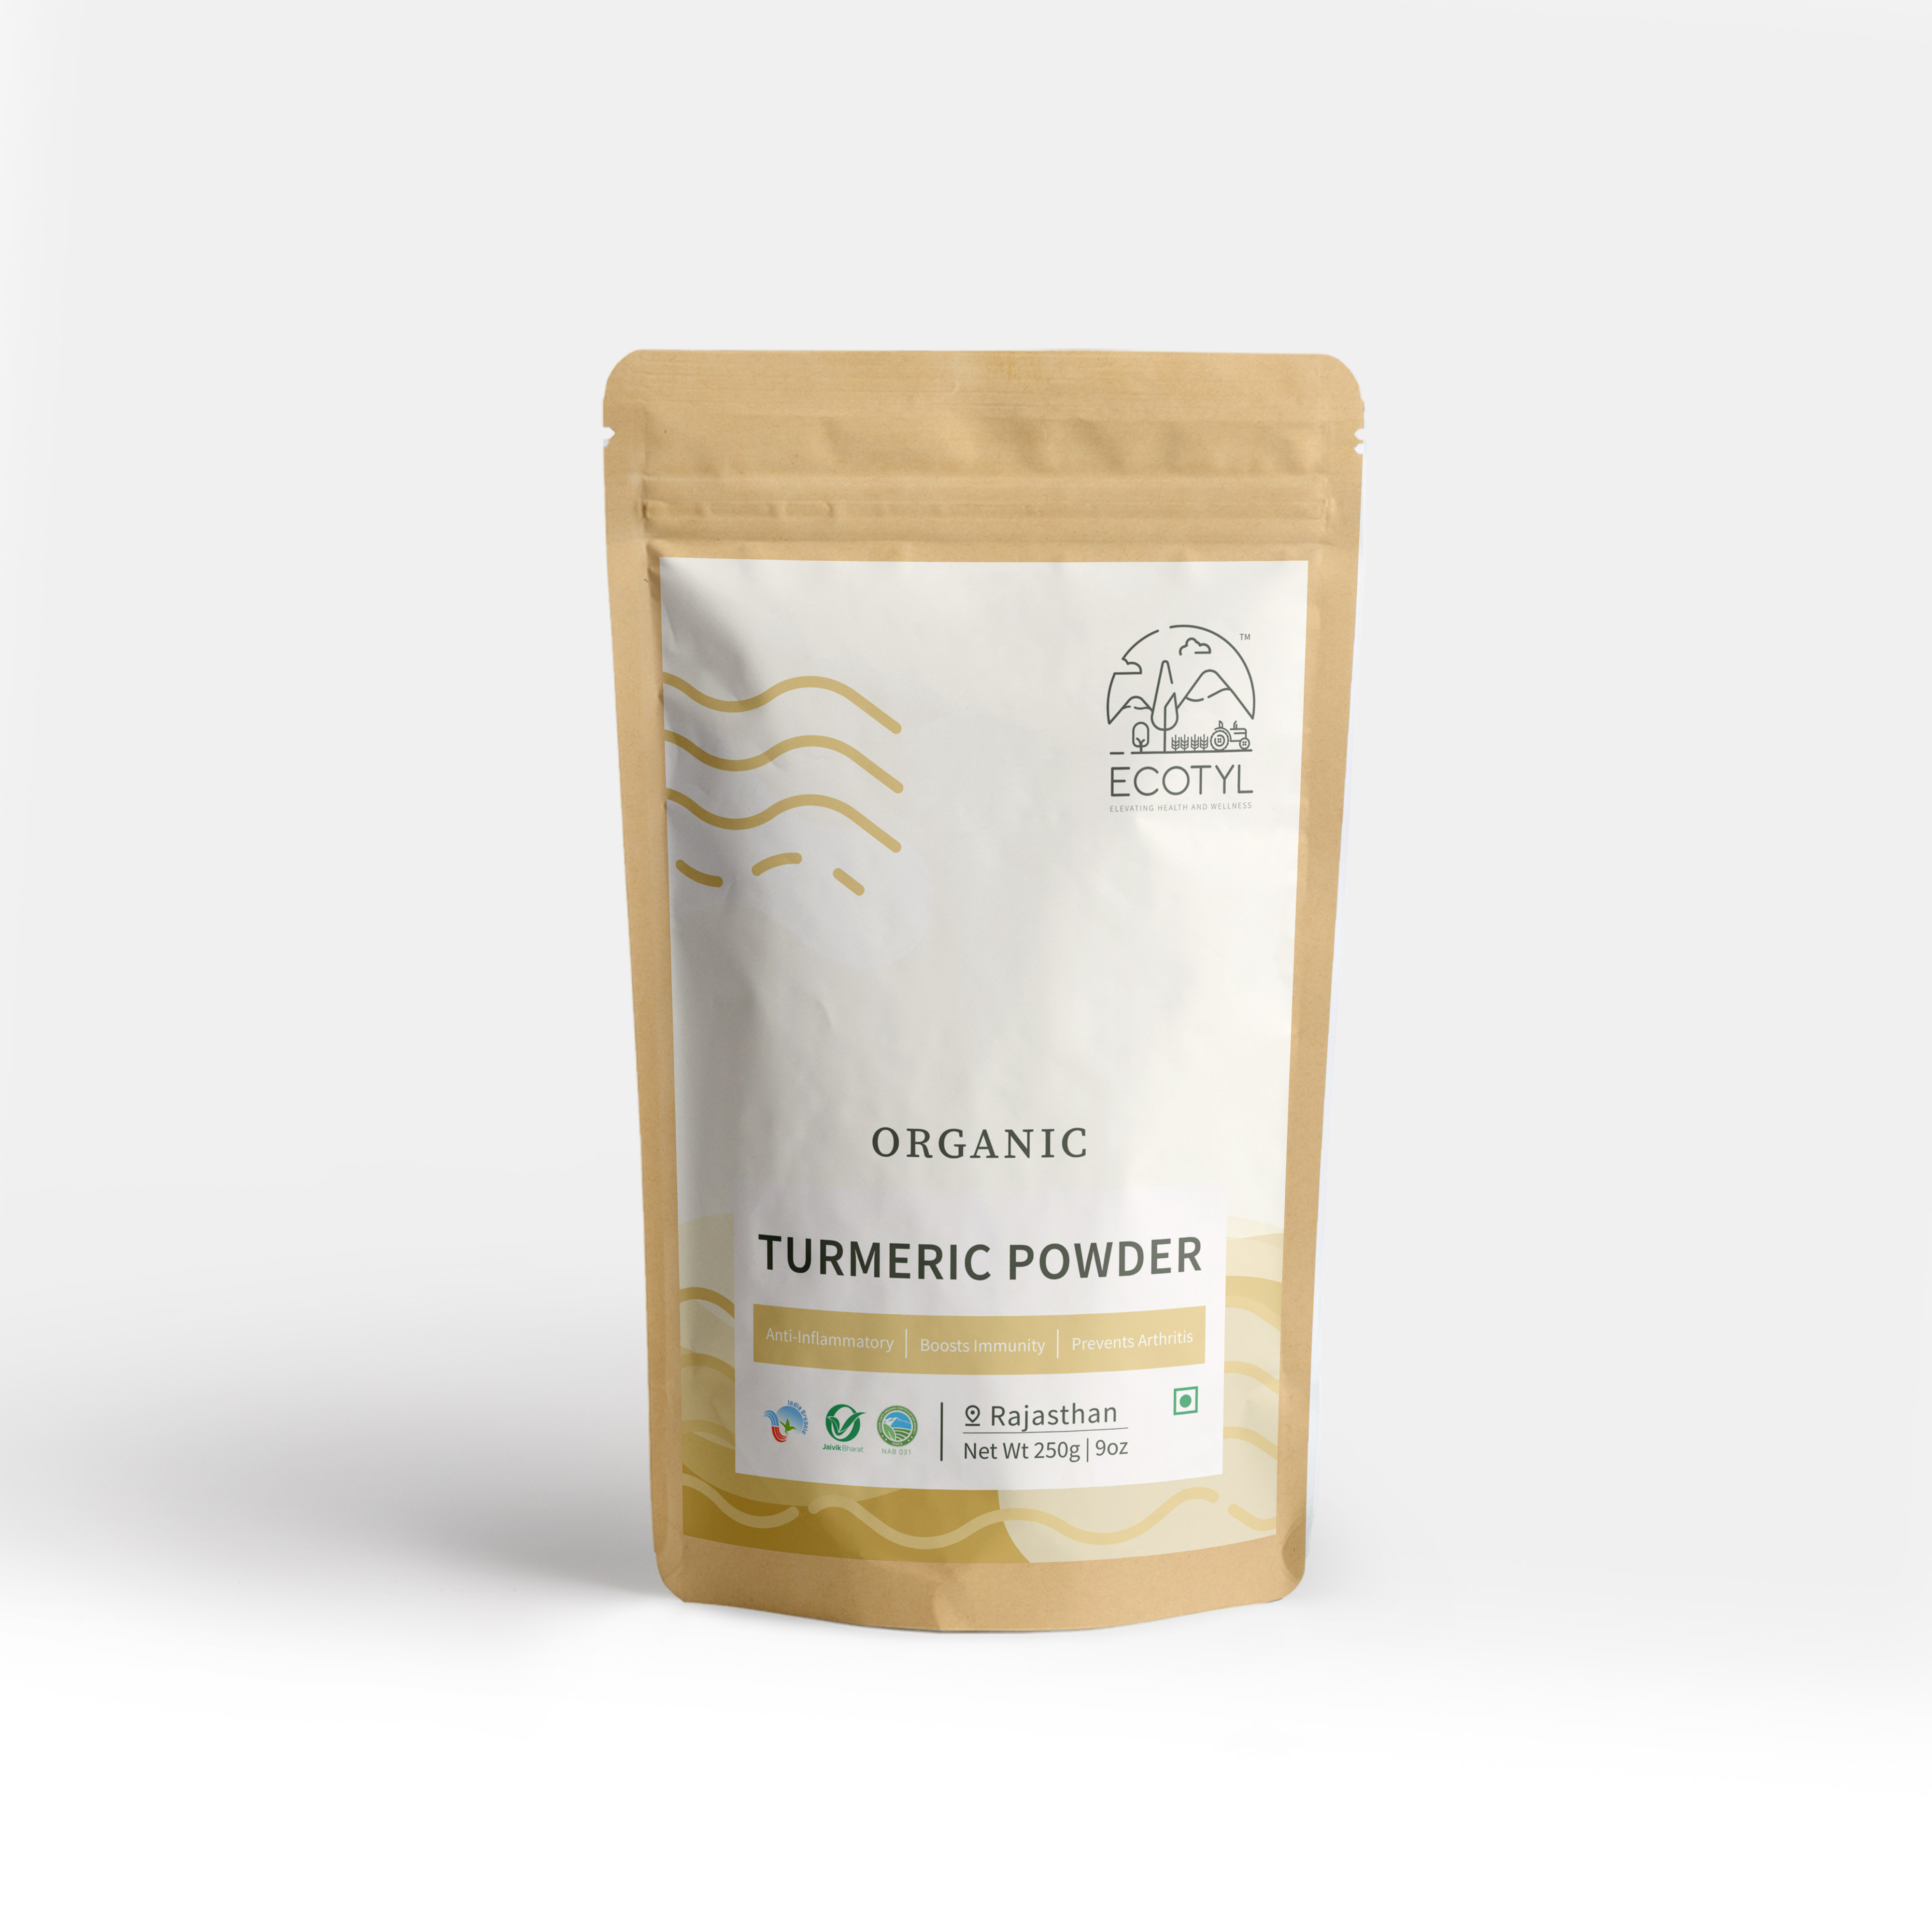 Buy Ecotyl Organic Turmeric Powder - 250 g at Best Price Online